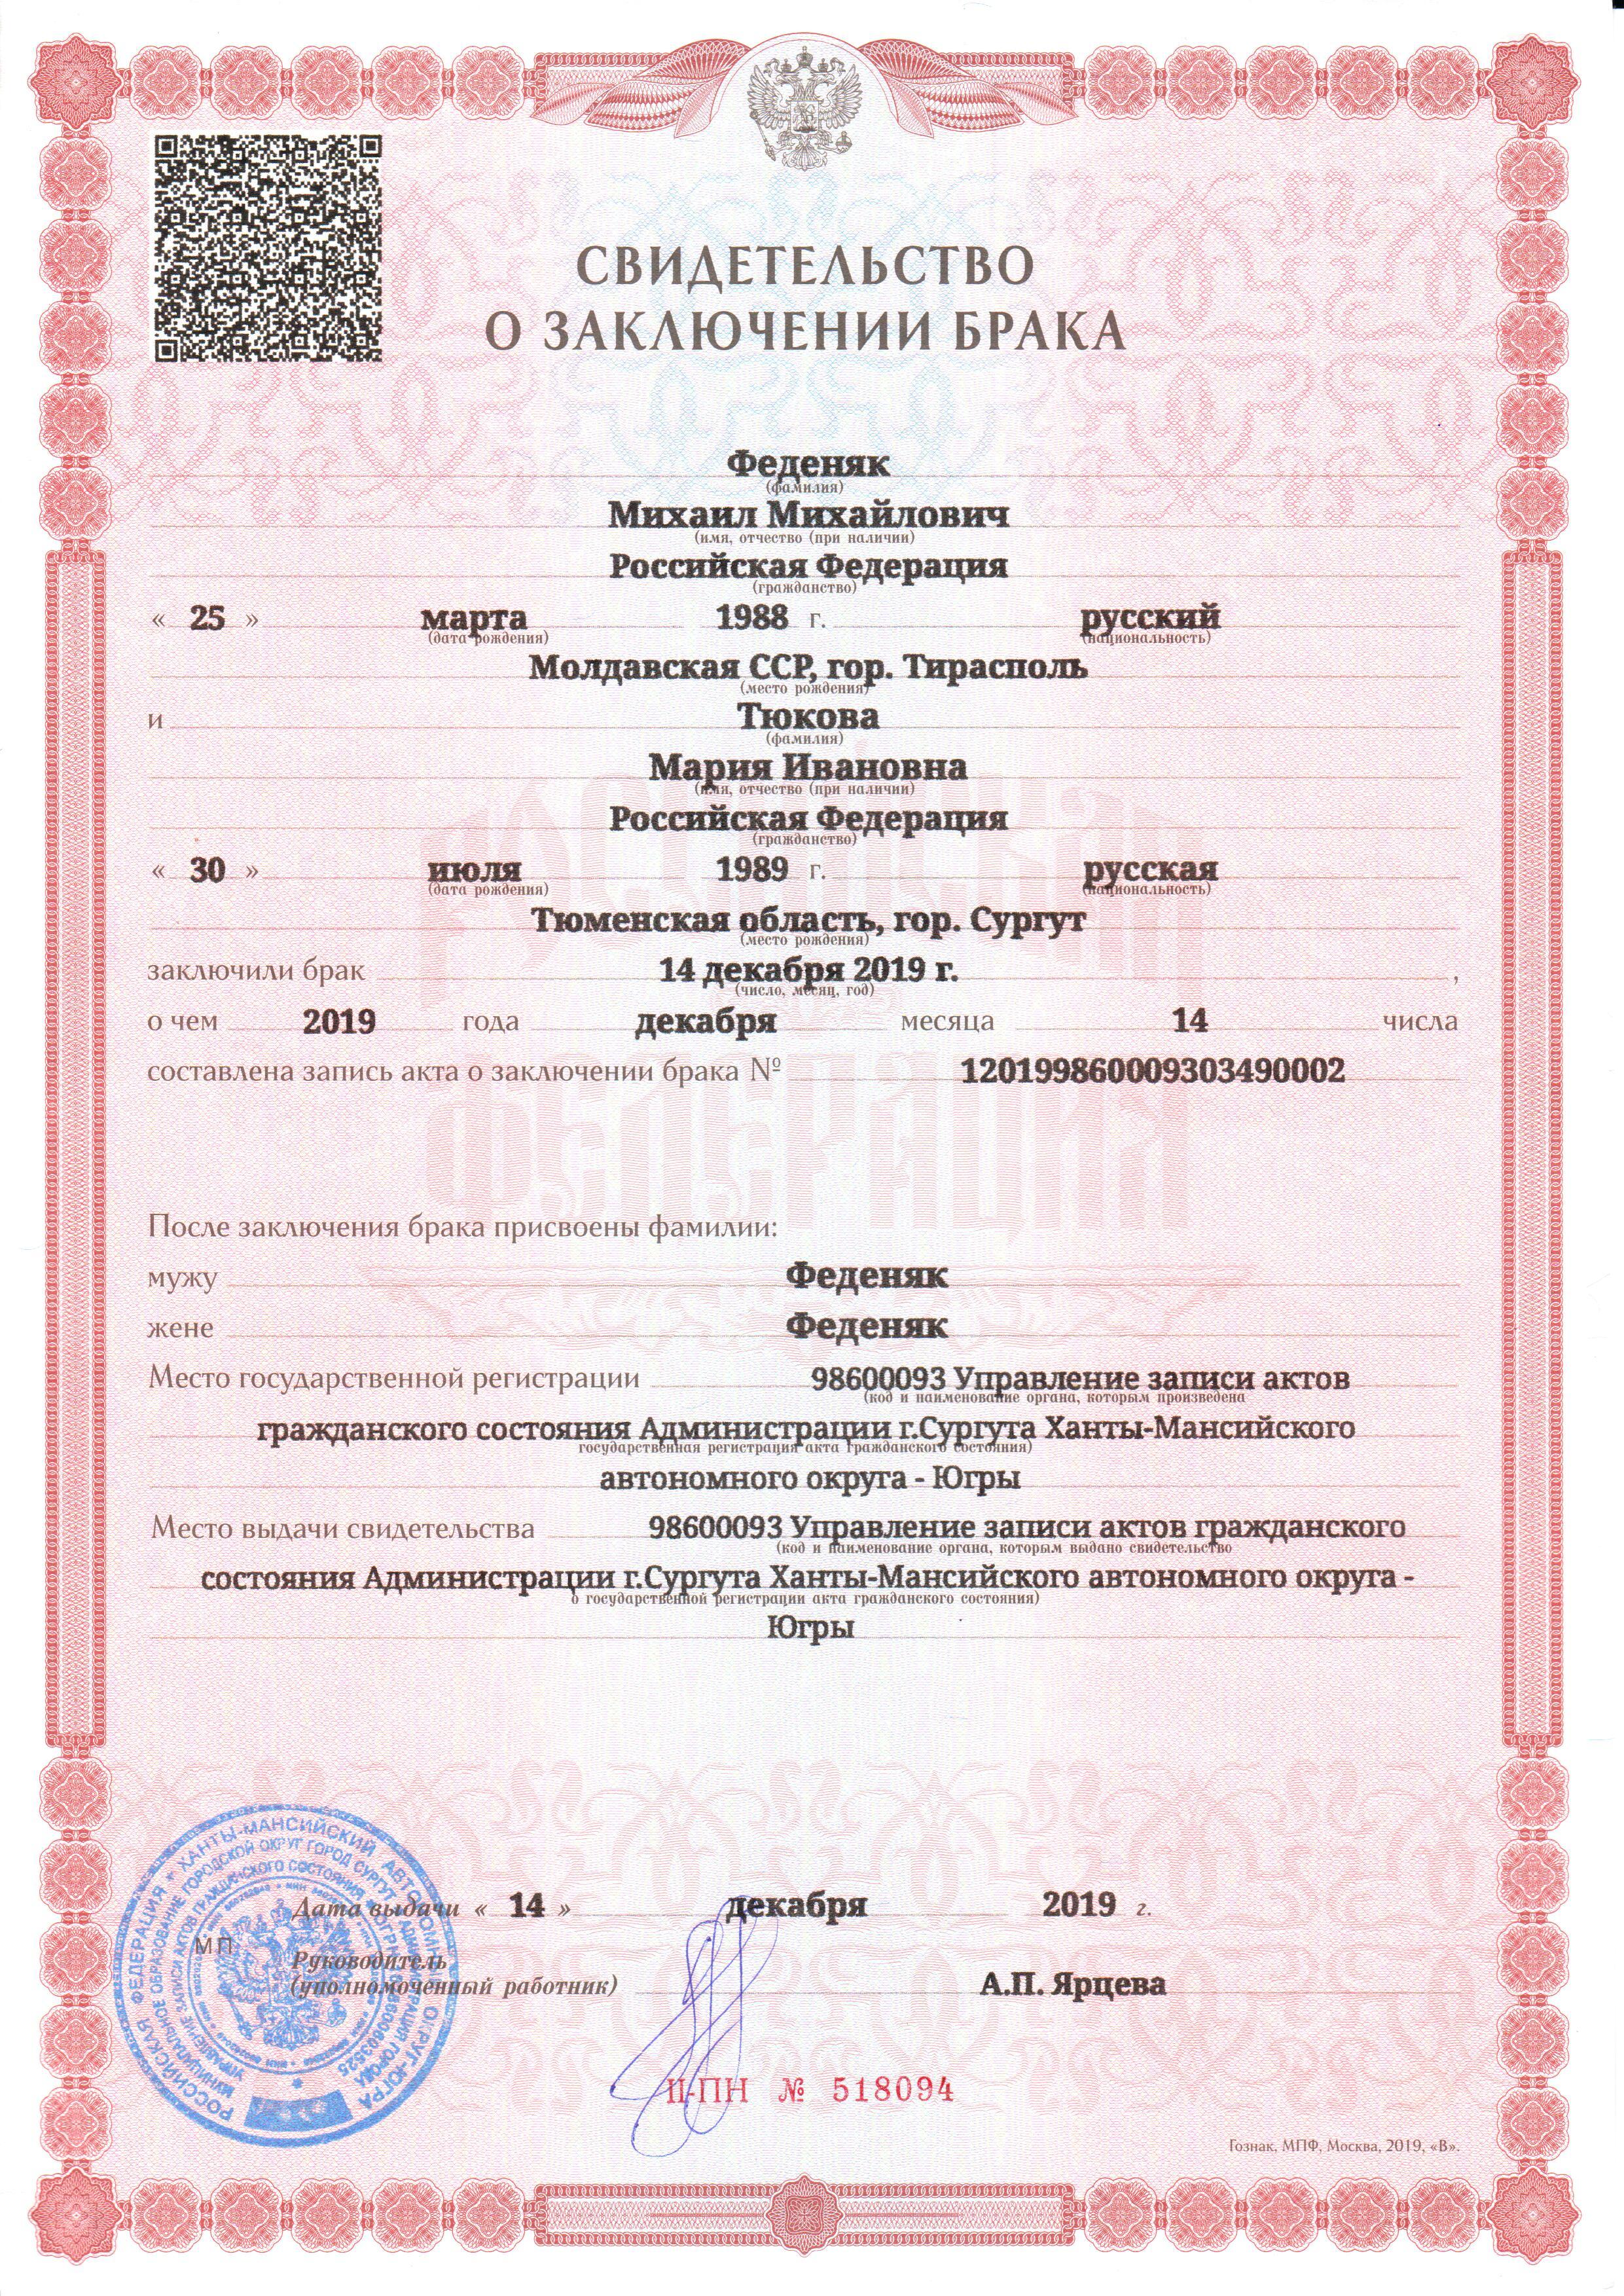 ᐉ официальная регистрация брака за границей: все тонкости и нюансы - ➡ danilov-studio.ru